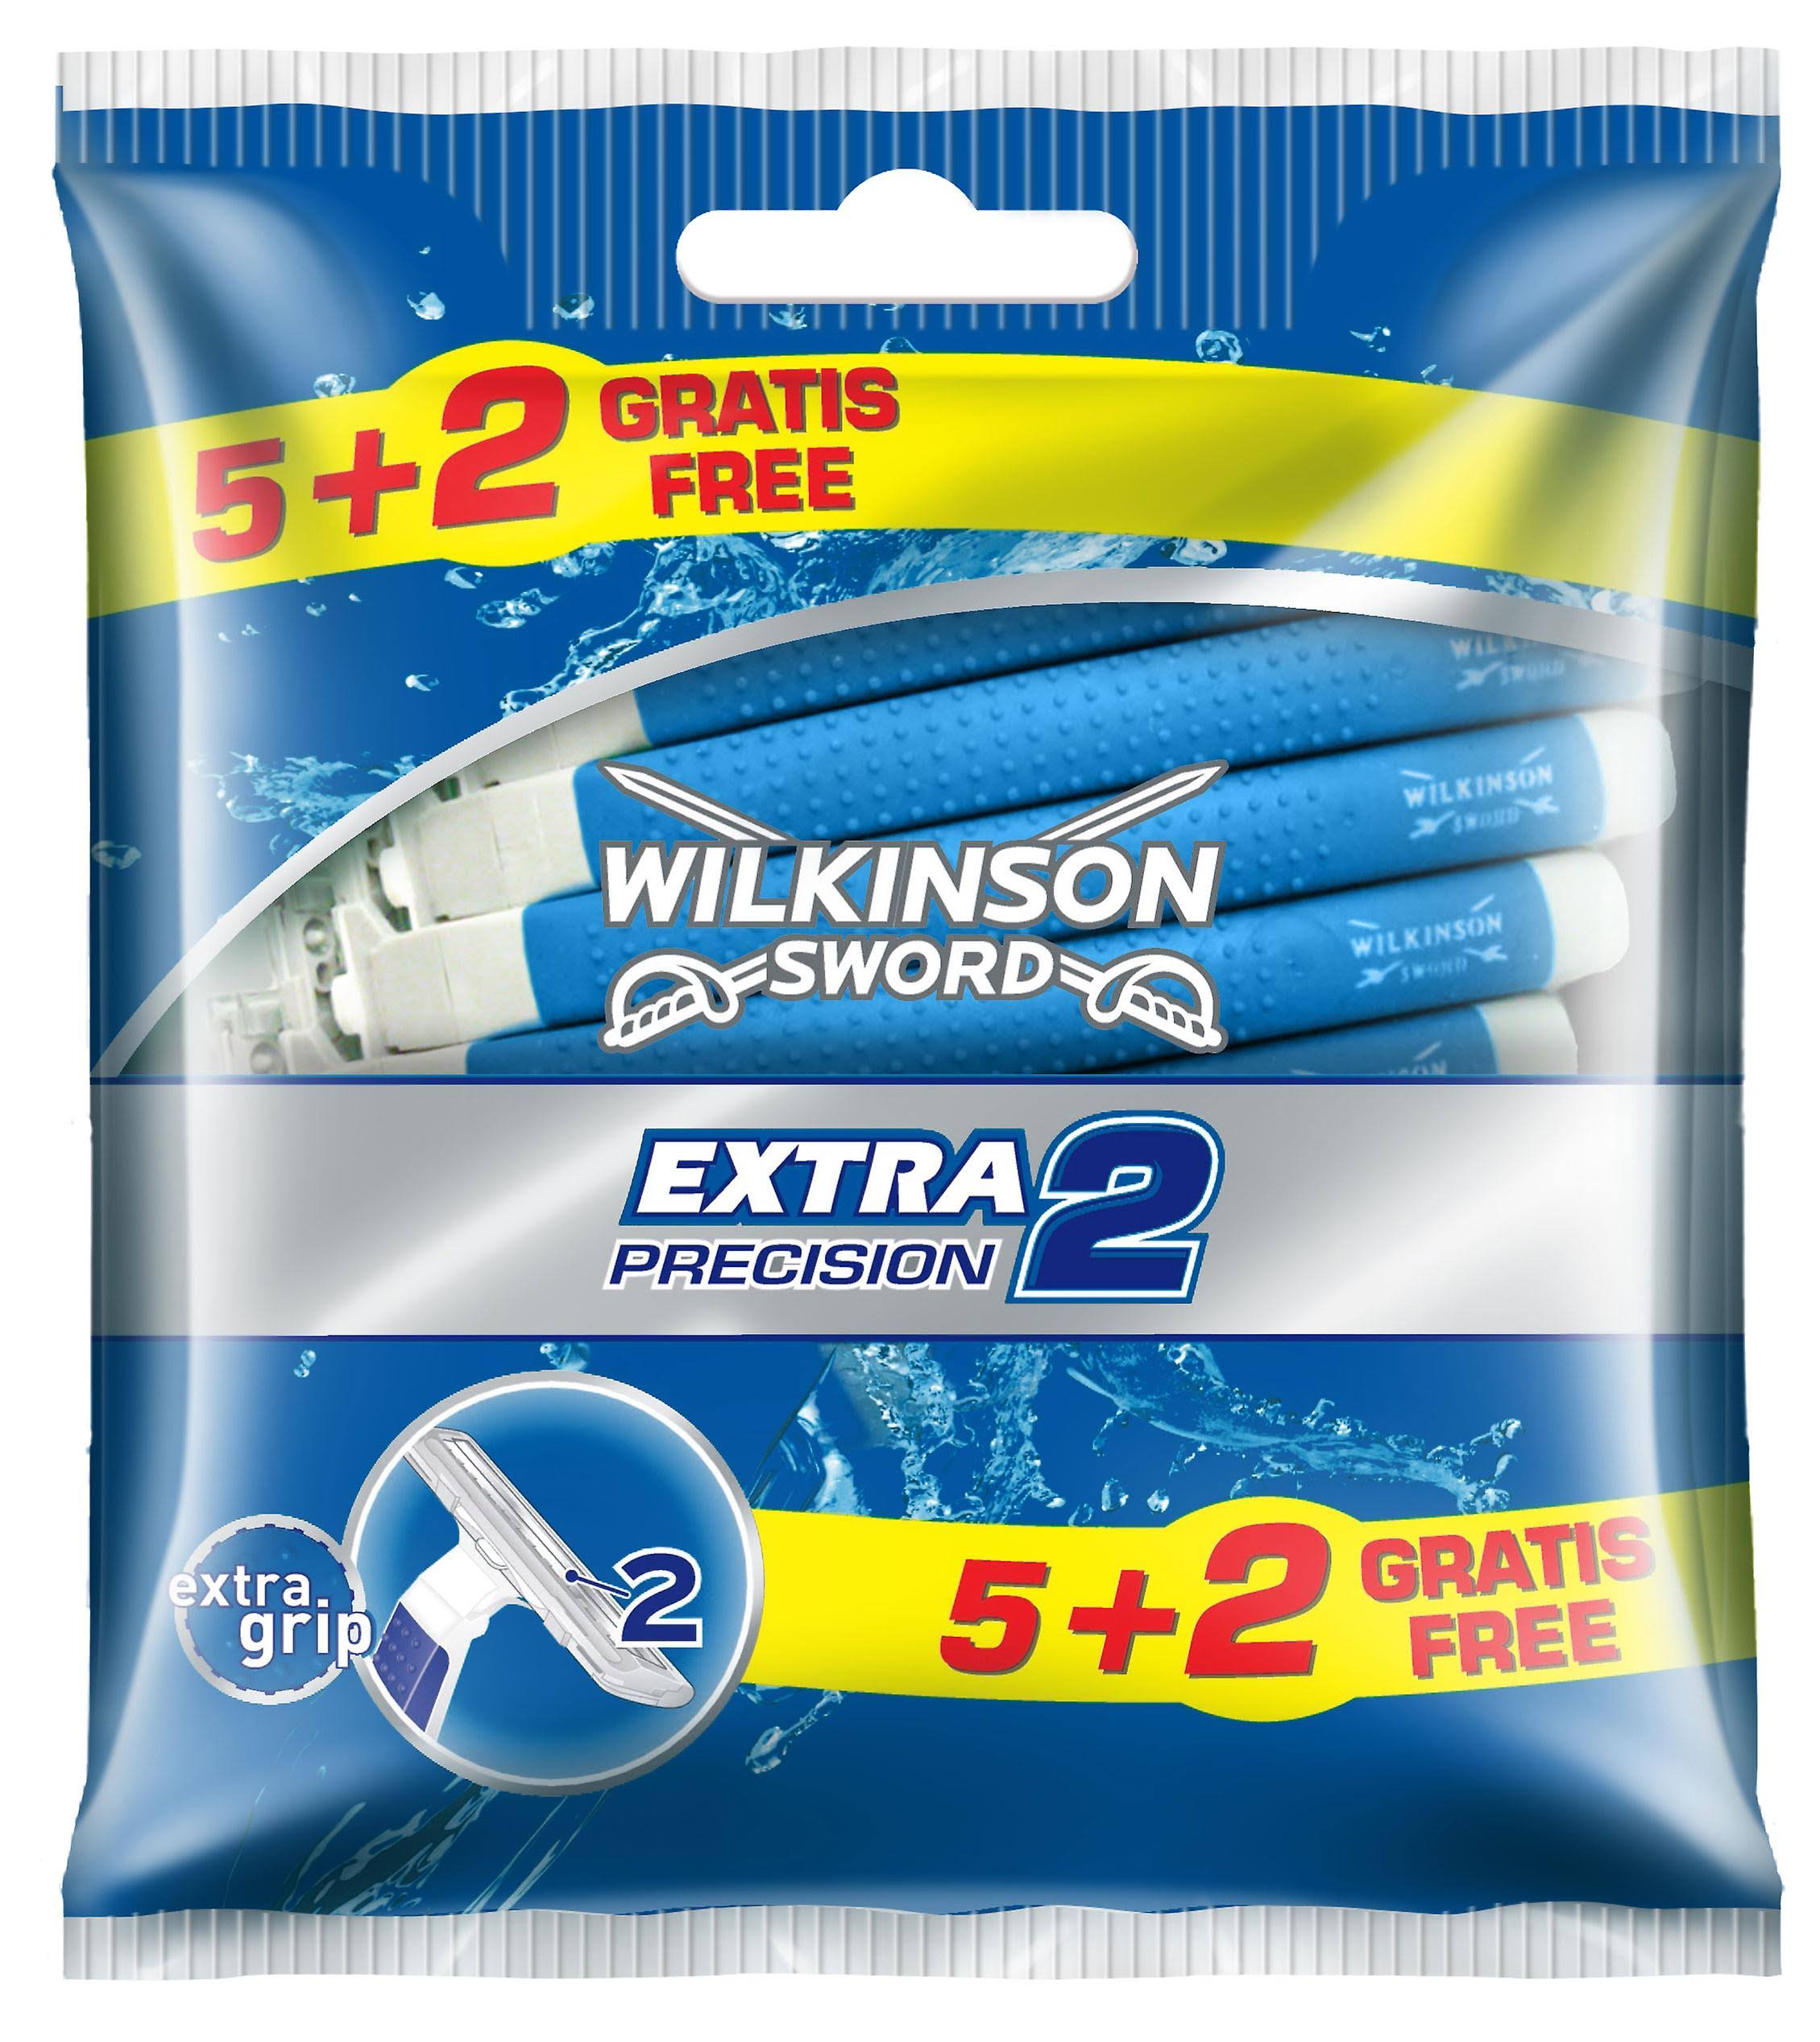 Wilkinson Sword Extra2 Precision 2 Blade Disposable Razors - 5pcs